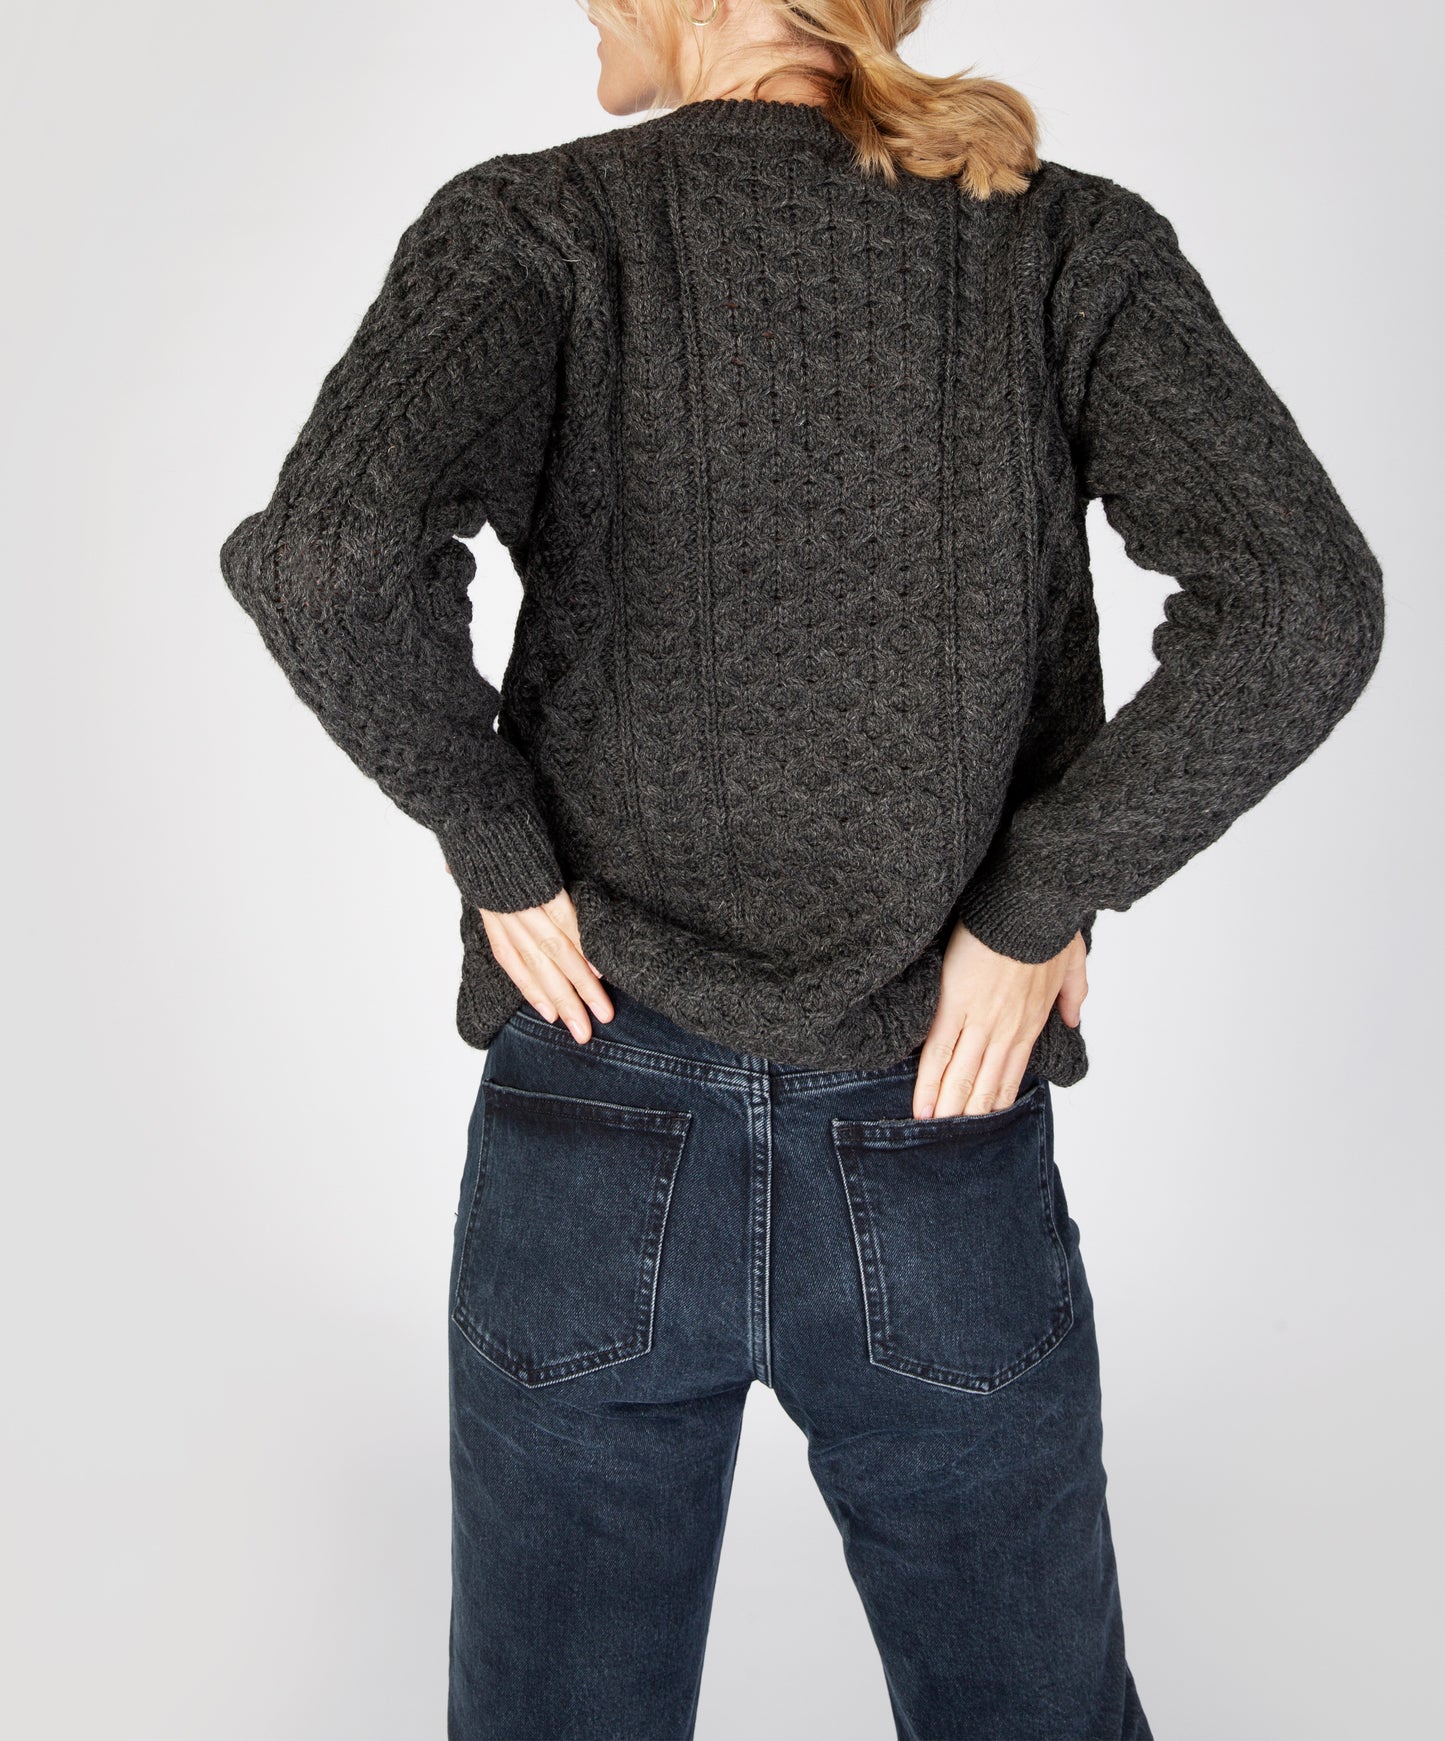 IrelandsEye Knitwear Blasket Honeycomb Stitch Womens Aran Sweater Graphite